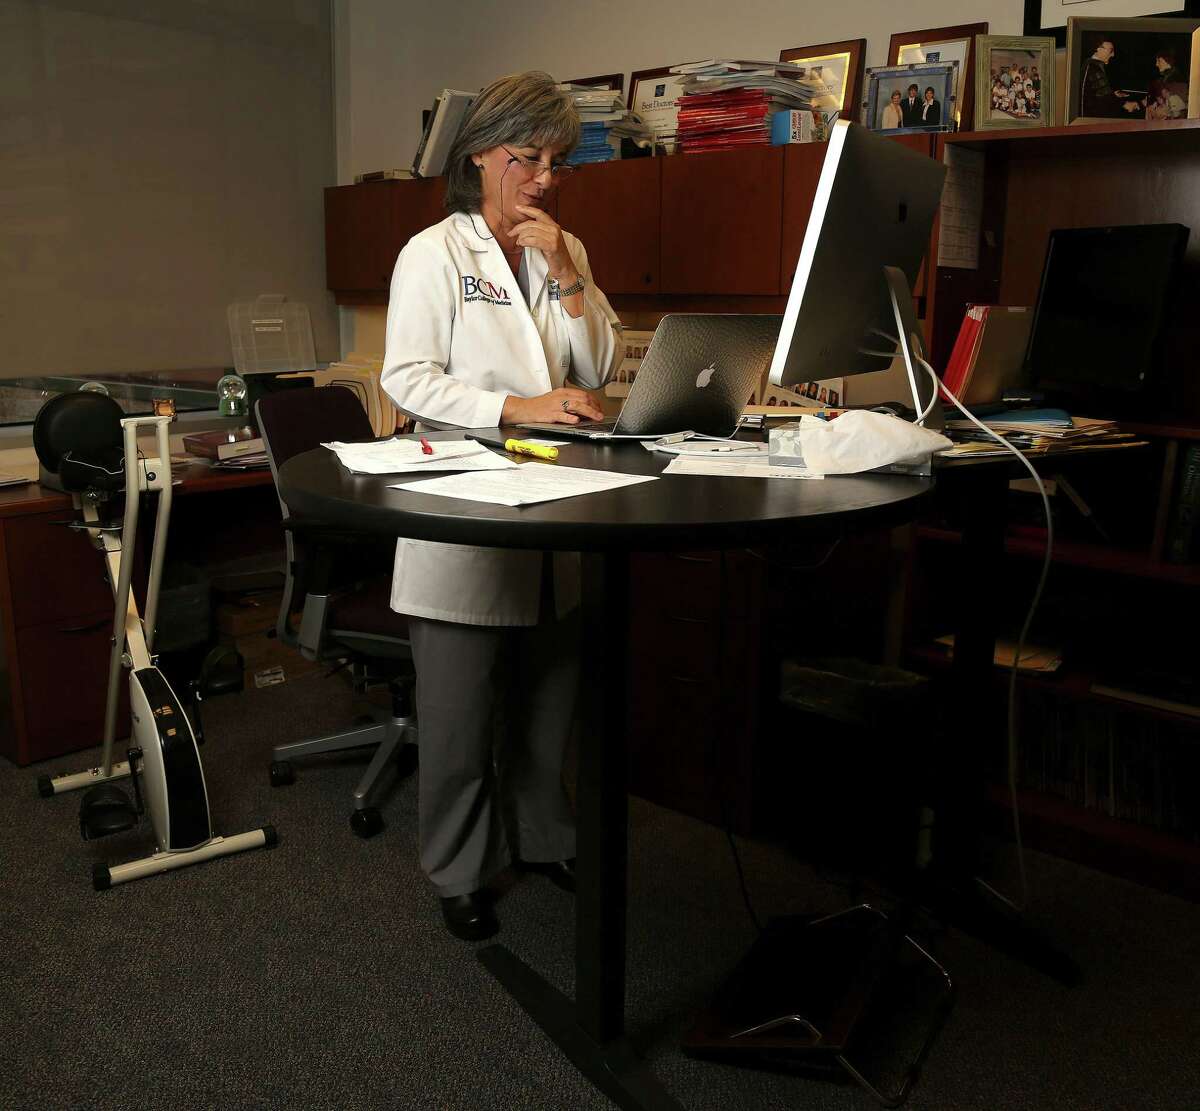 Researchers say you burn 15 percent more calories using standing desks.